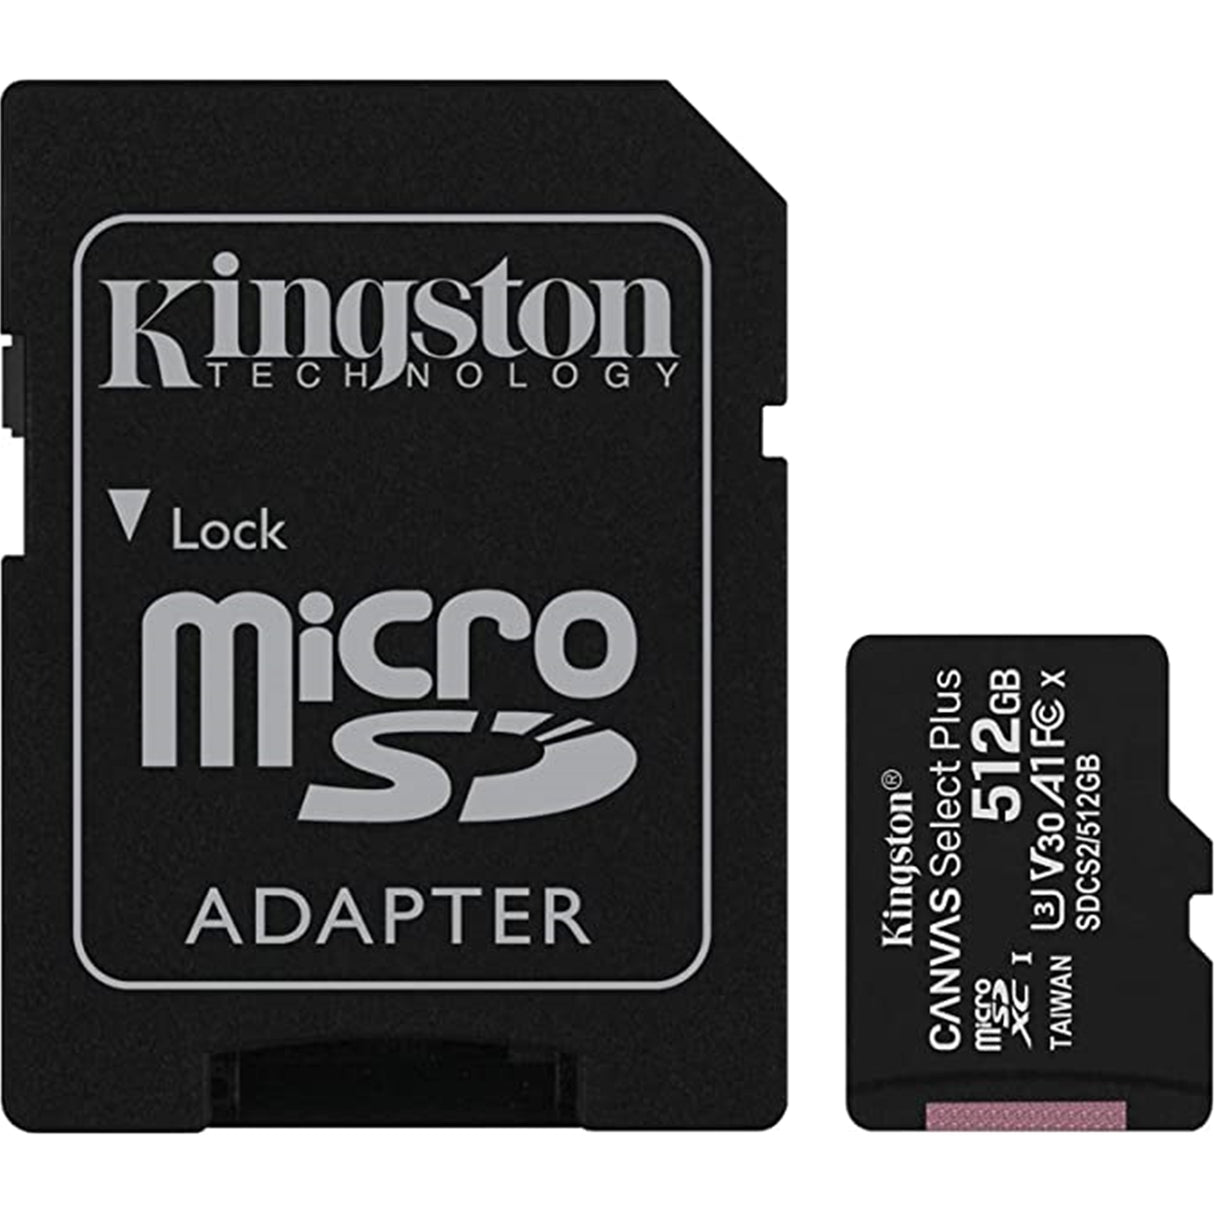 Kingston Canvas Select Plus SDCS2/512GB 512GB Micro SD UHS-I Flash Card